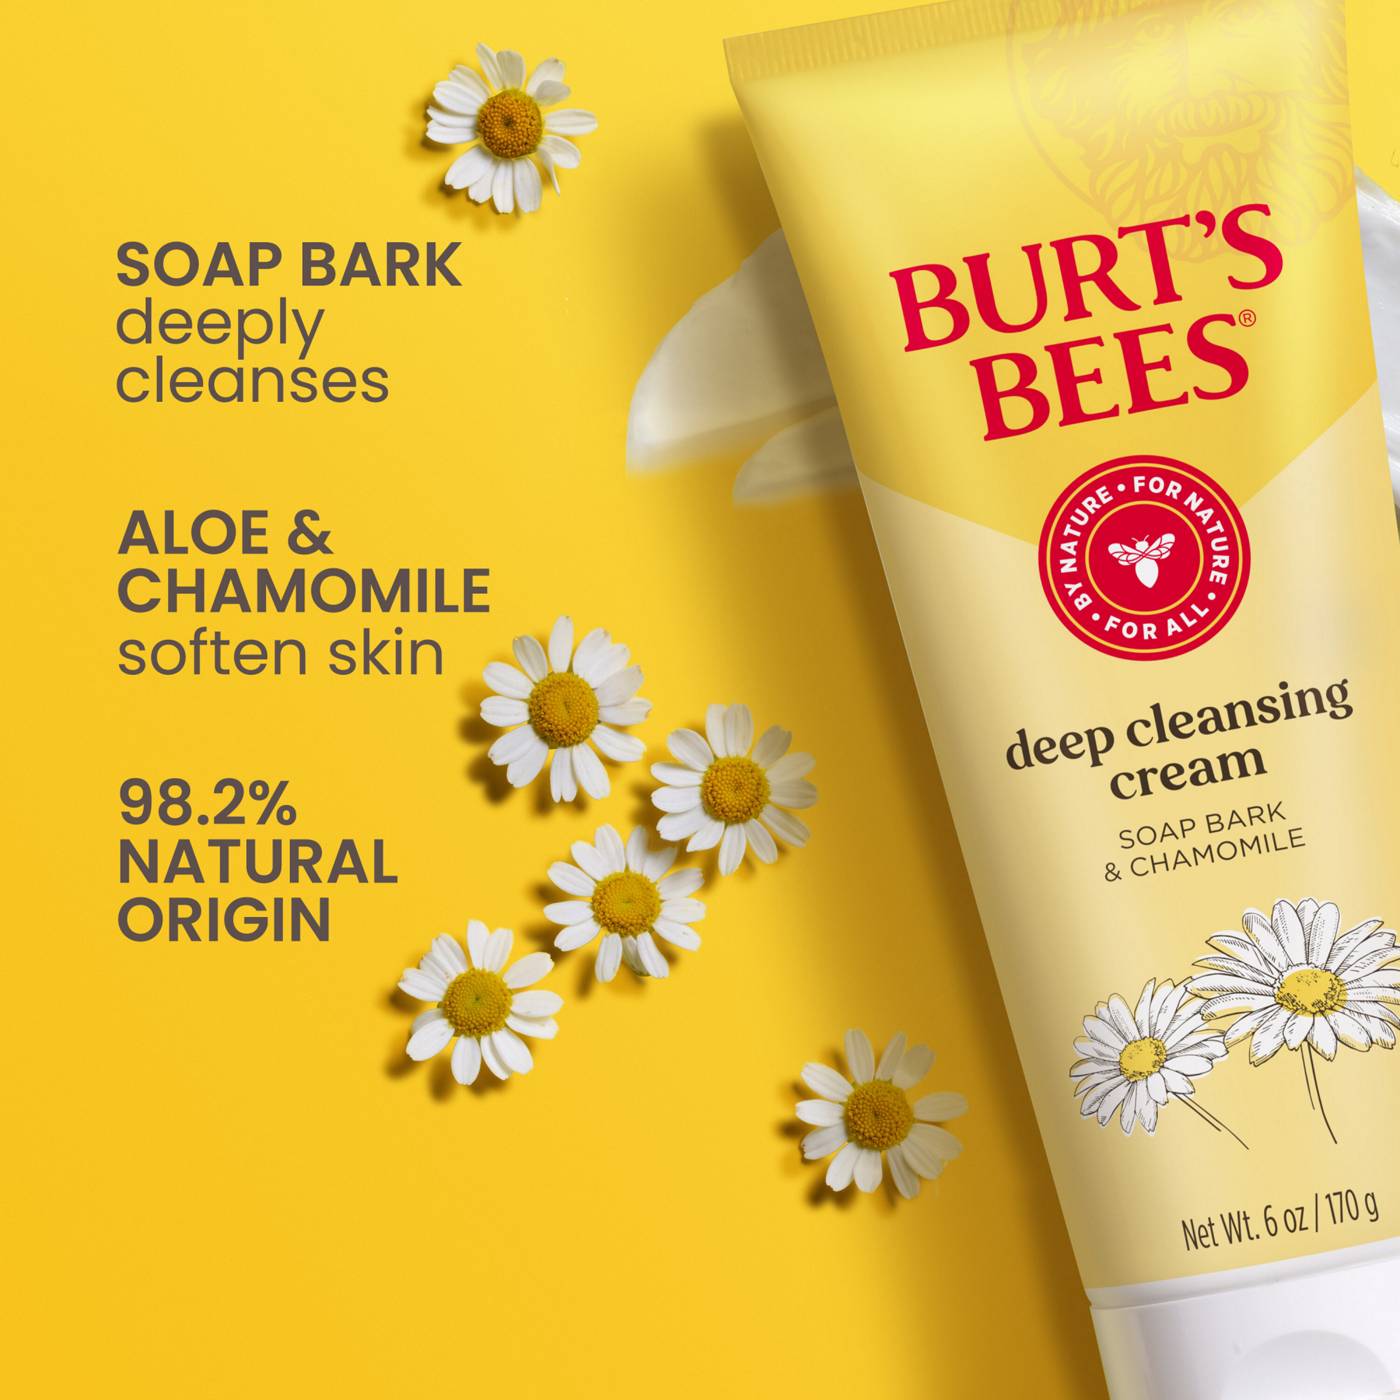 Burt's Bees Deep Cleansing Cream - Soap Bark & Chamomile; image 11 of 13